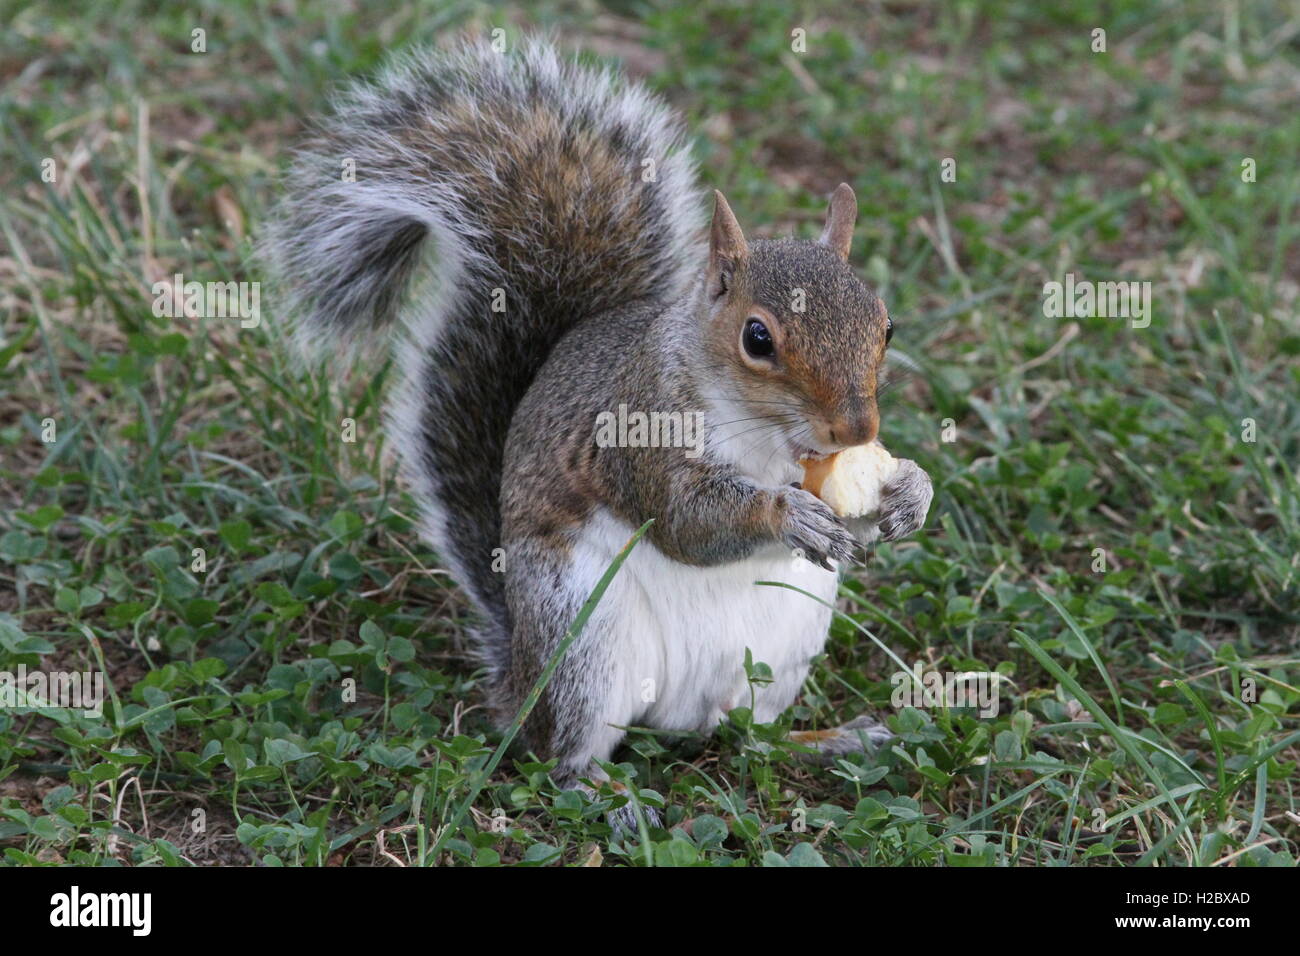 Random squirrel eating Stock Photo